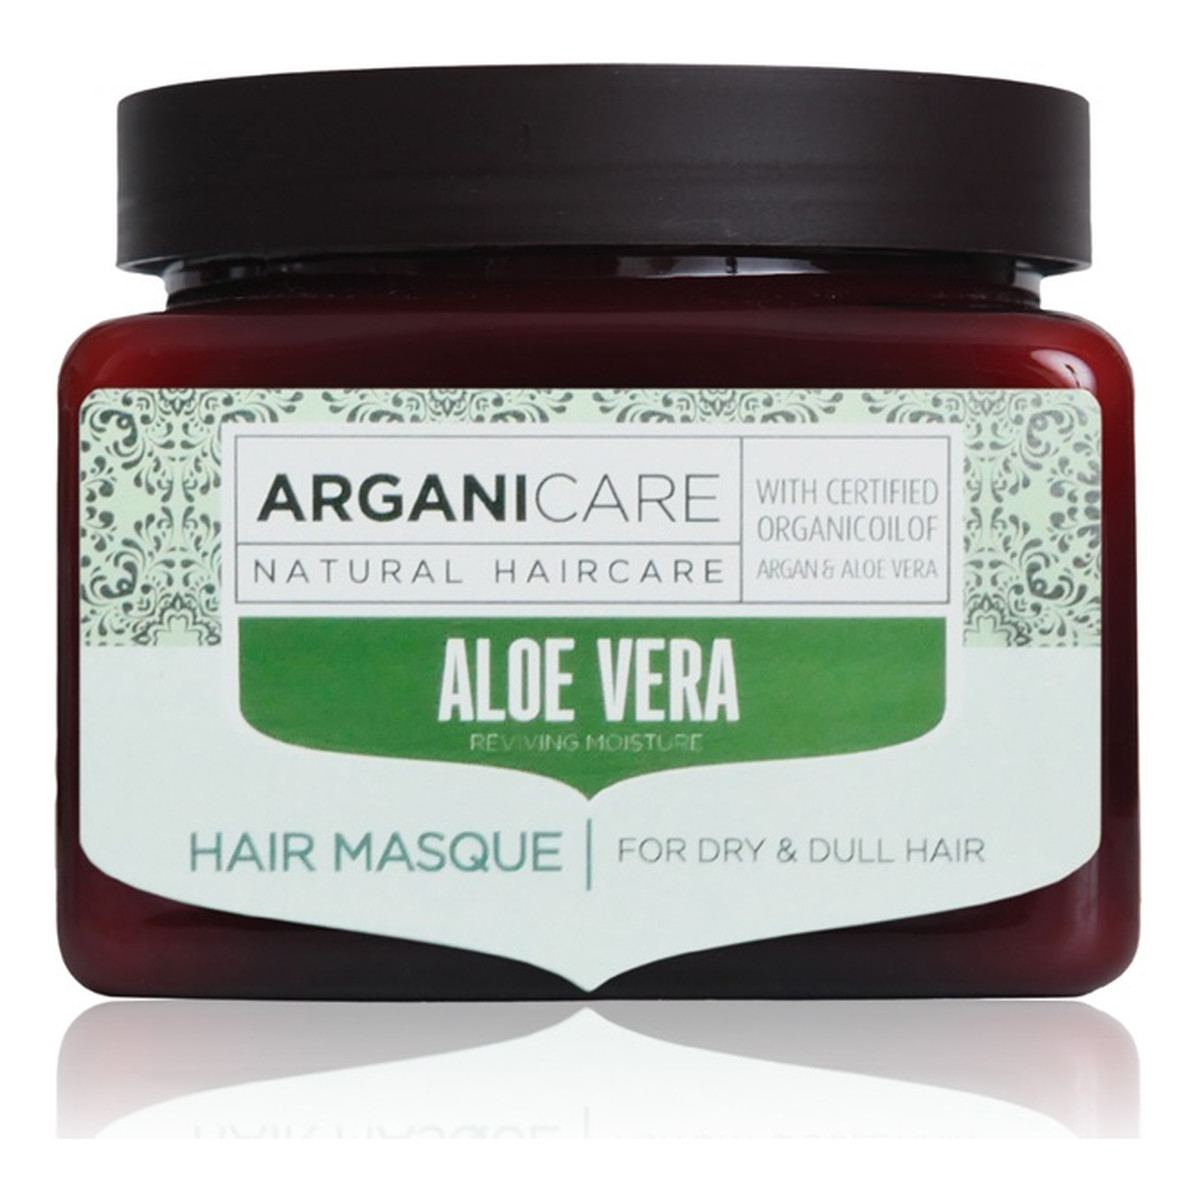 Arganicare Aloe vera maska do włosów z aloesem 500ml